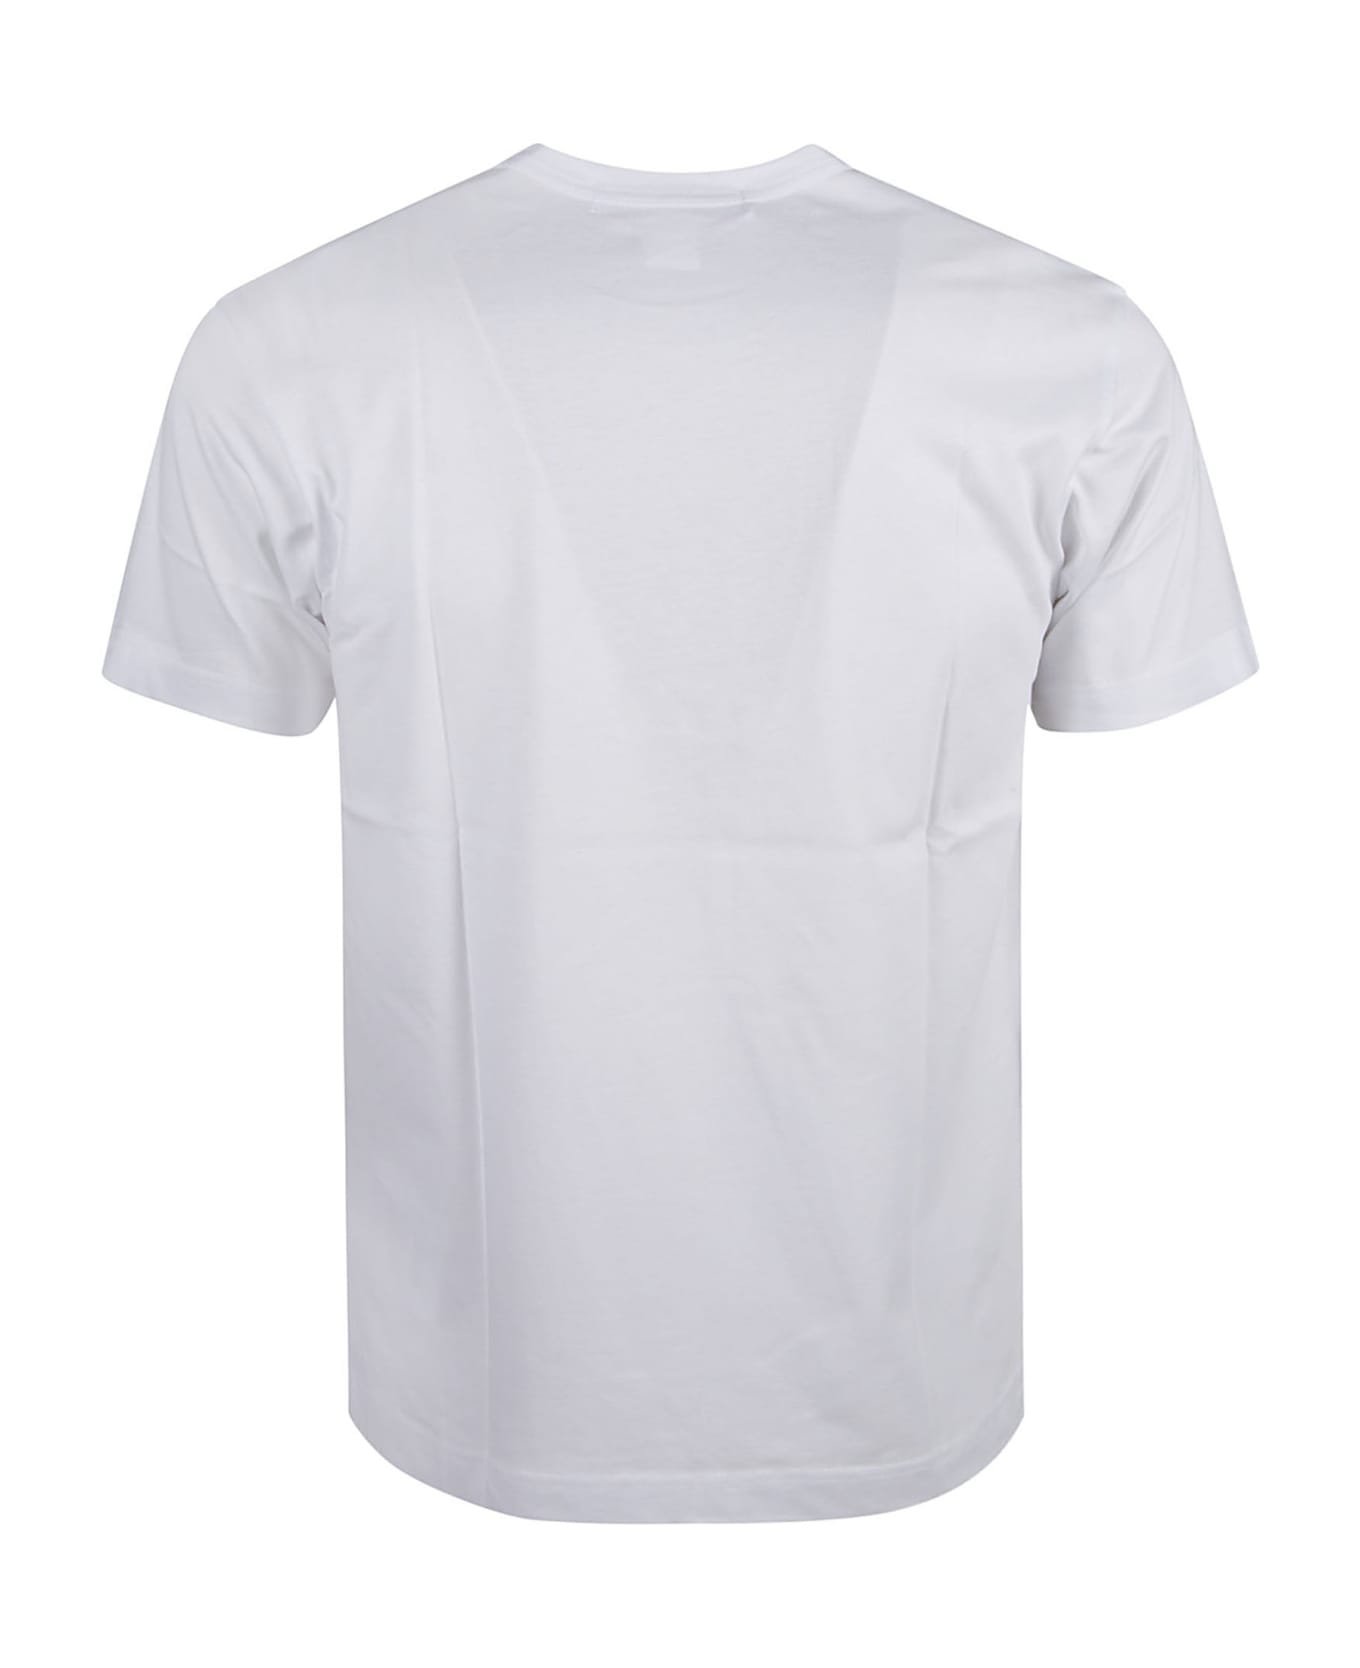 Comme des Garçons Shirt Dogs Never Bite Me T-shirt - White シャツ